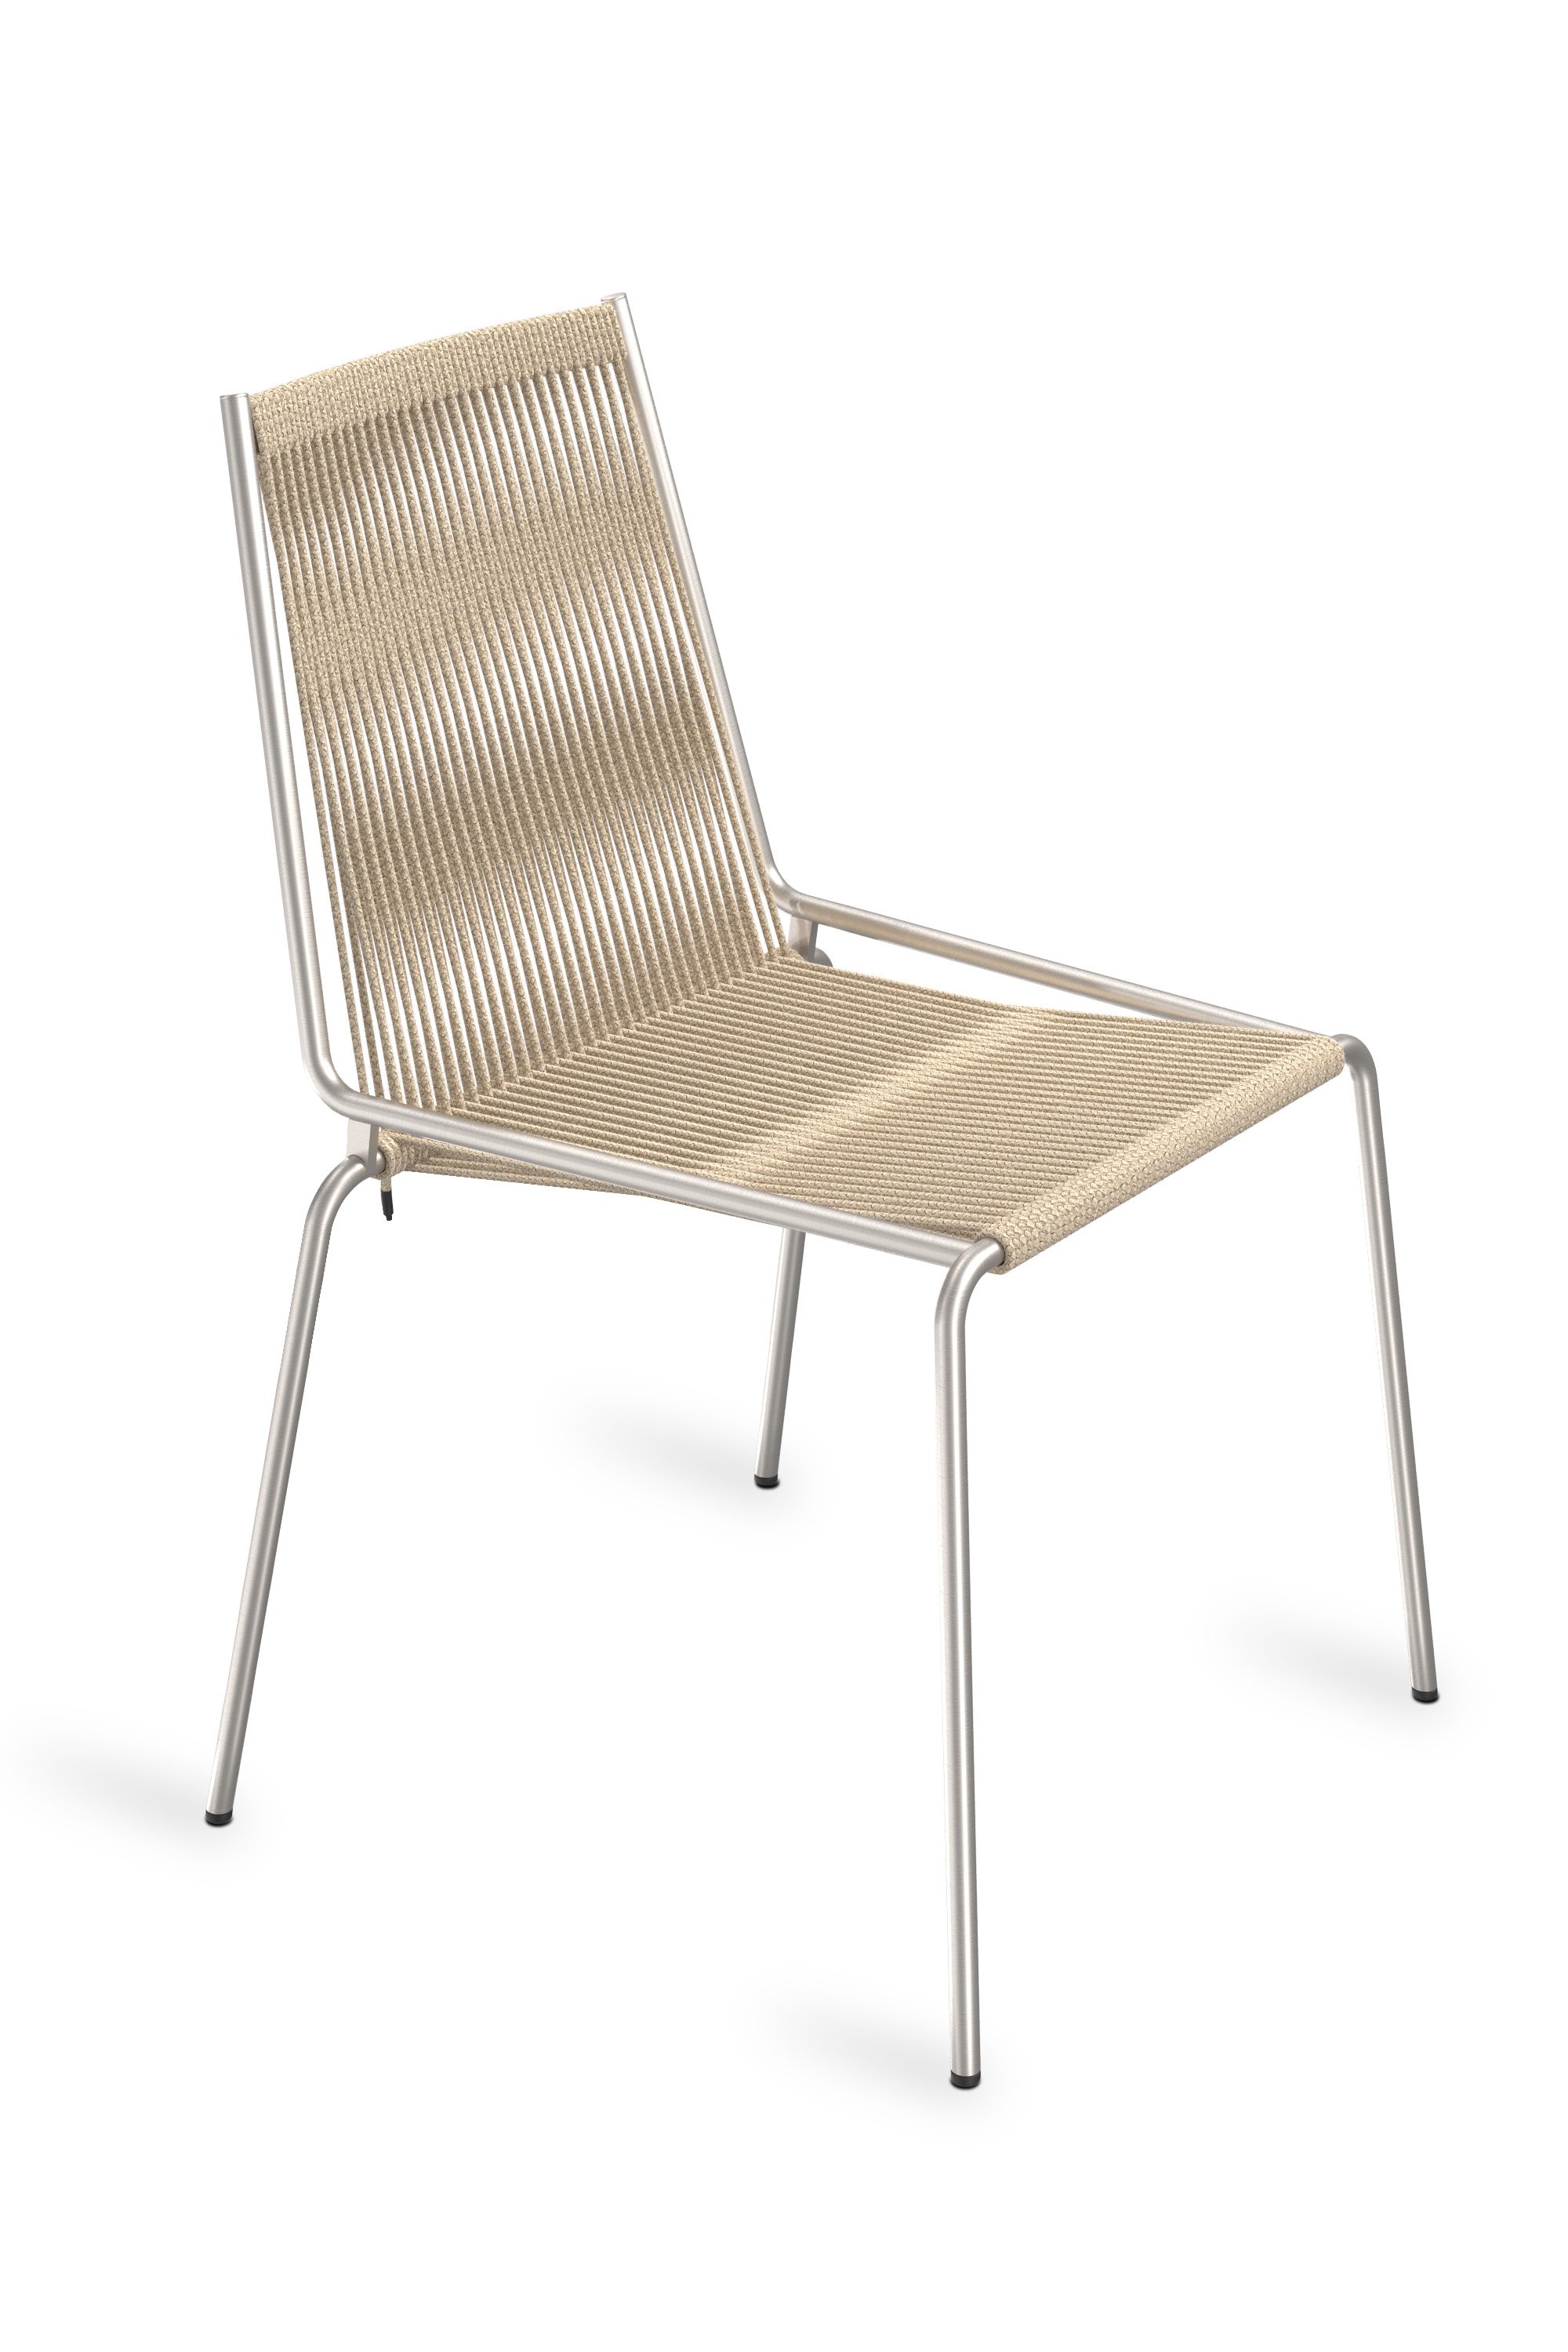 D202_Noel Chair Chair_Steel base_Nature_pack_Thorup Copenhagen_side.jpg